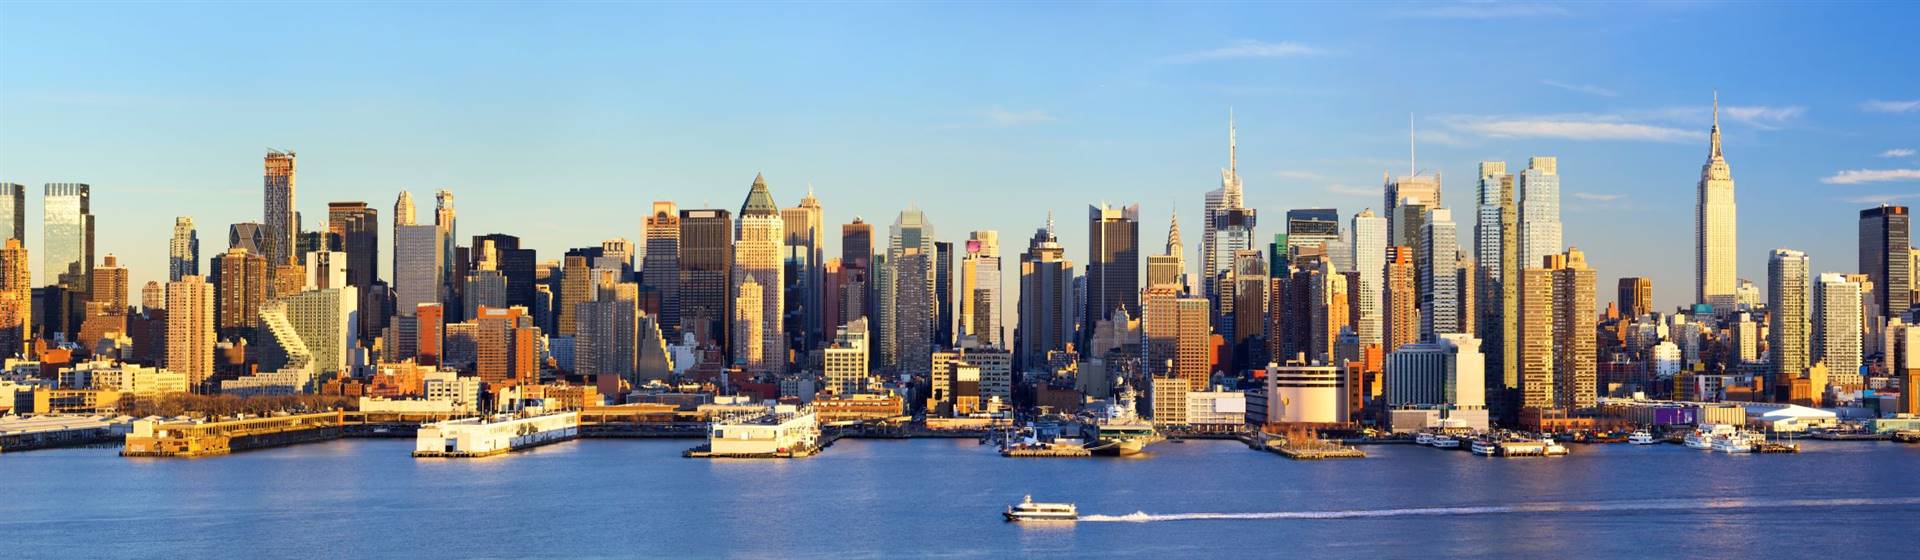 <img src="newyork-shutterstock.jpeg" alt="New York Skyline"/>